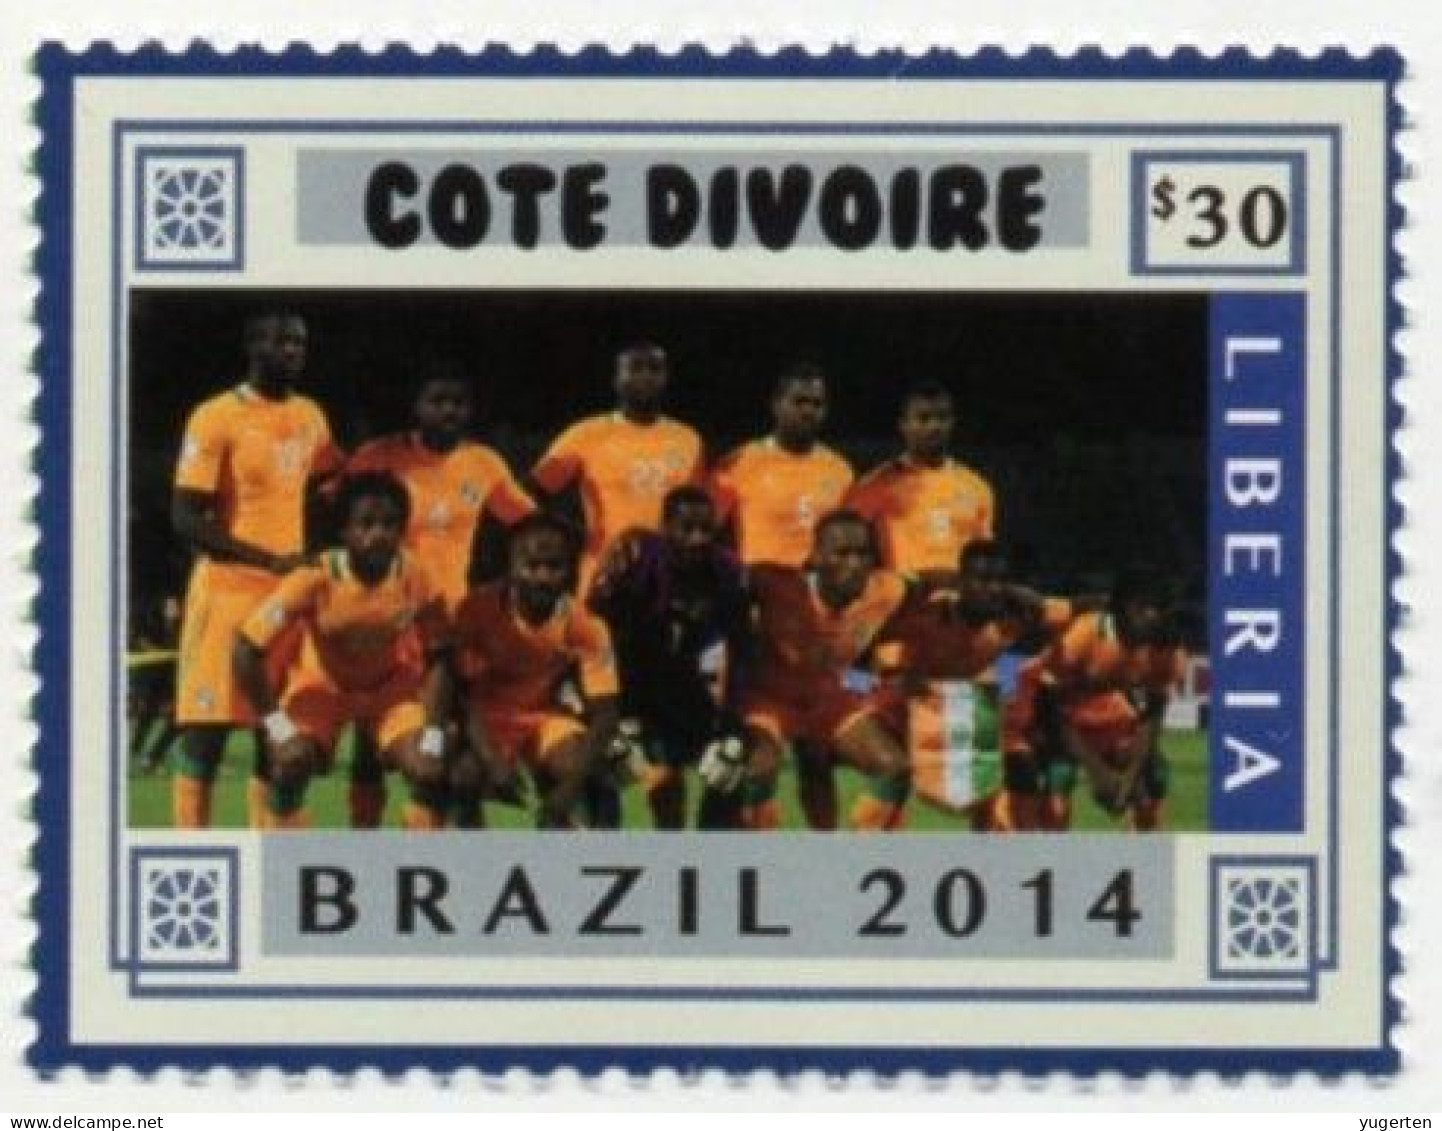 LIBERIA 2014 - 1v - MNH - Ivory Coast Team - Brazil World Football Championship - Soccer Calcio - Football - World Cup - 2014 – Brésil